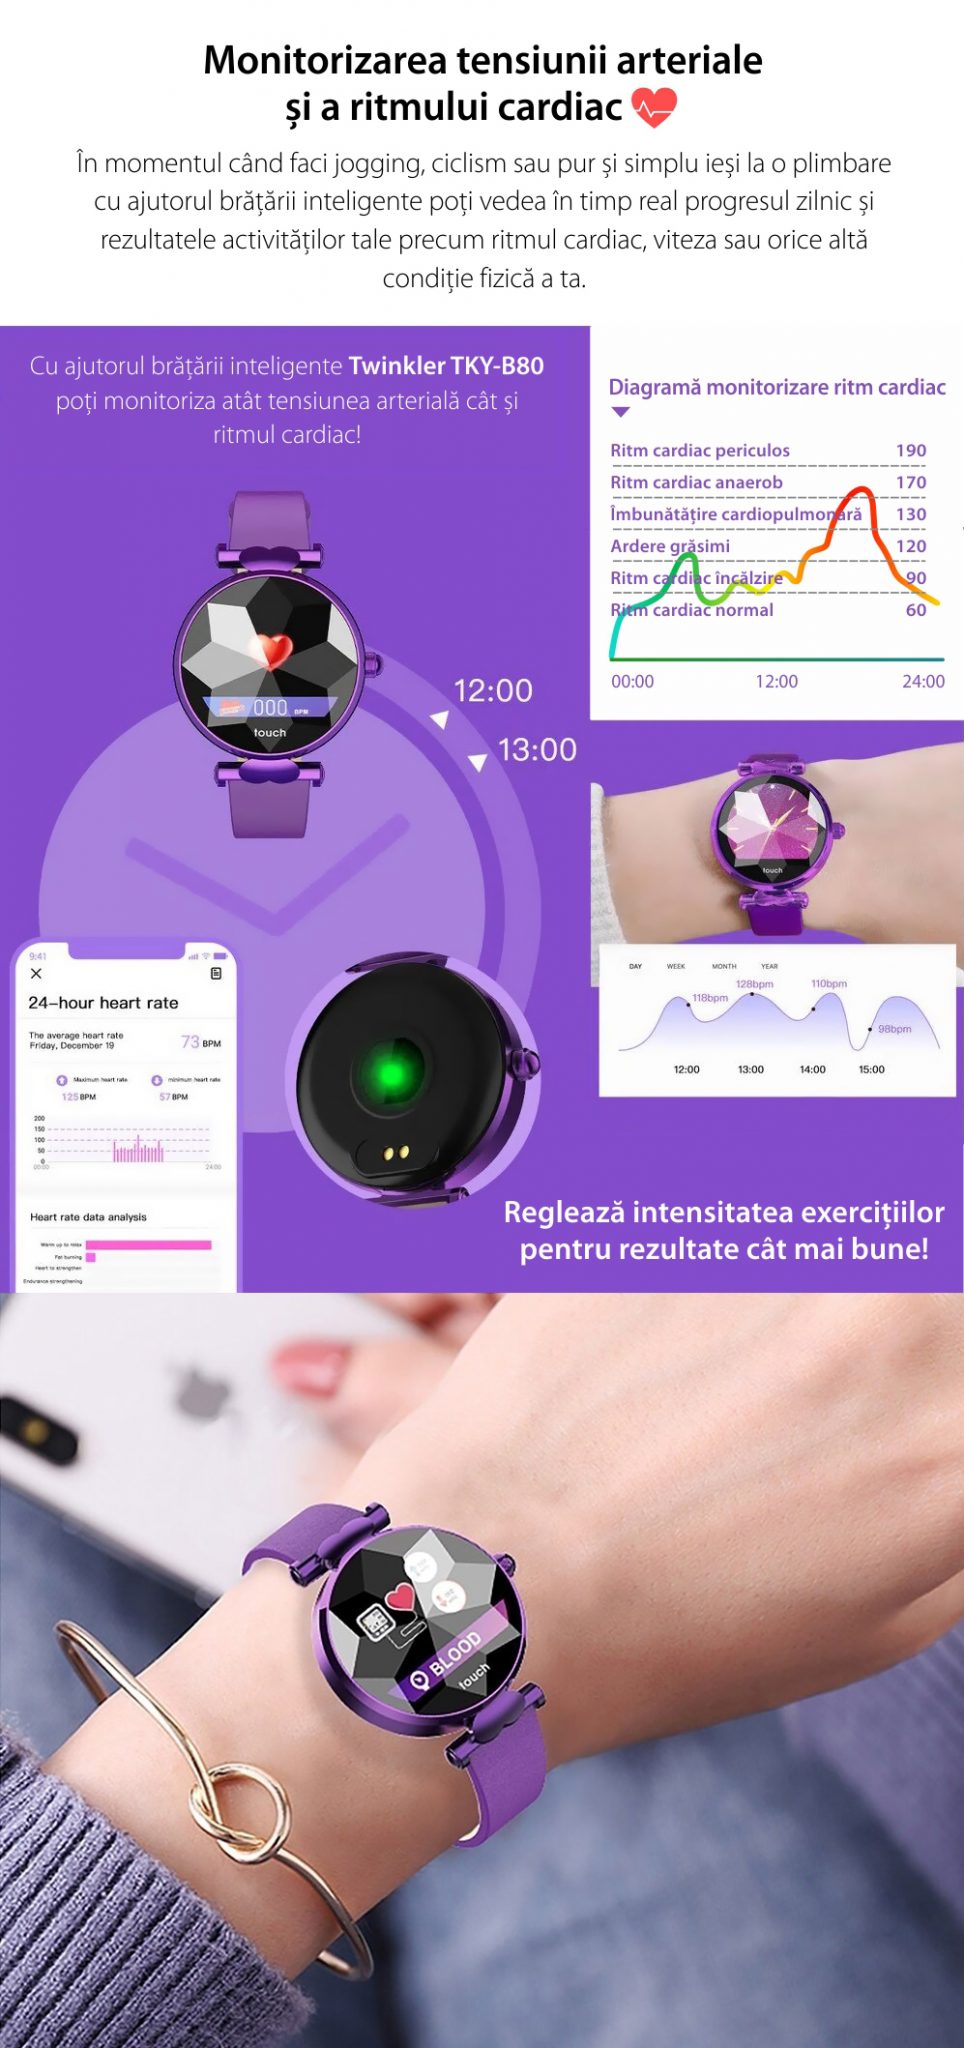 Ceas Smartwatch fitness fashion TKY-B80 Piele cu functie de monitorizare ritm cardiac, Tensiune arteriala, Monitorizare somn, Notificari Apel/ SMS, Mov